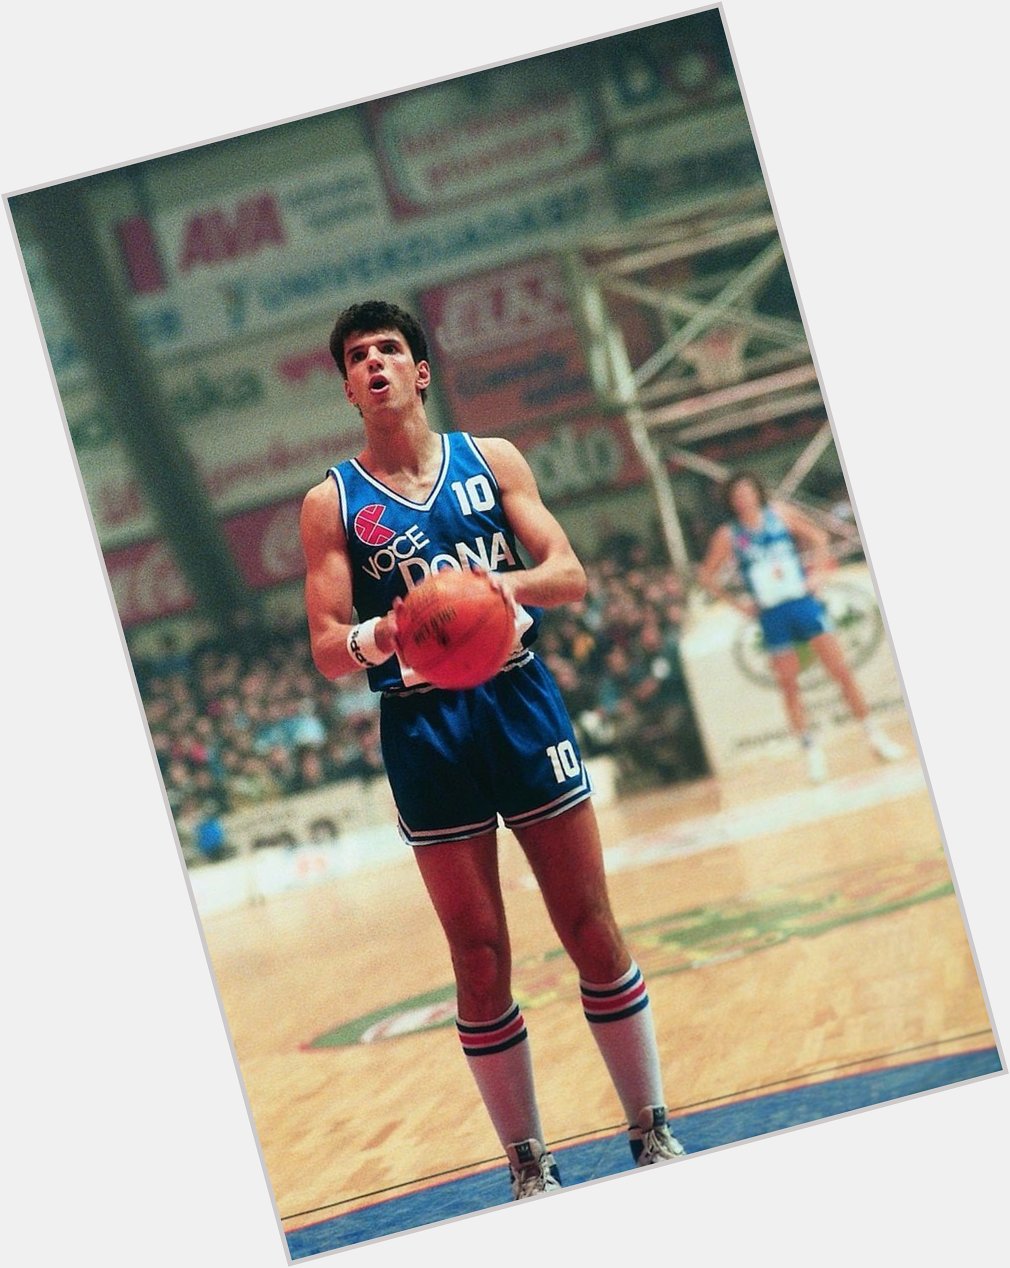 22.10.1964 happy birthday to the Mozart of basketball Drazen Petrovic! 